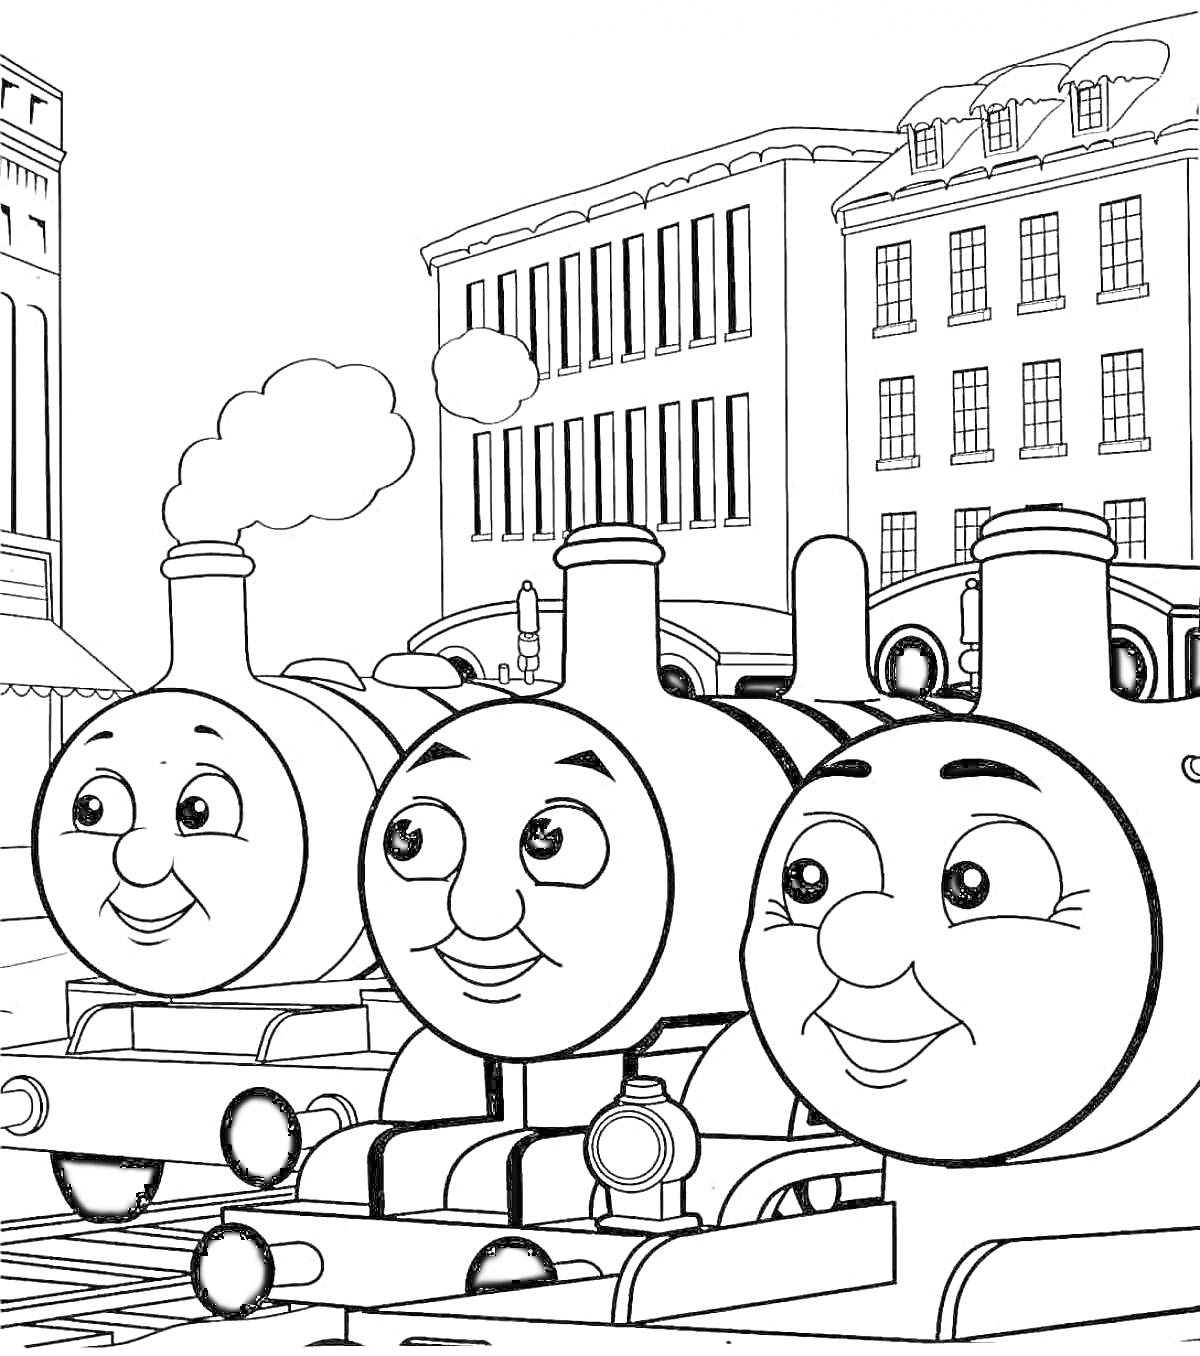 Раскраска Паровозики Томас с друзьями на фоне зданий